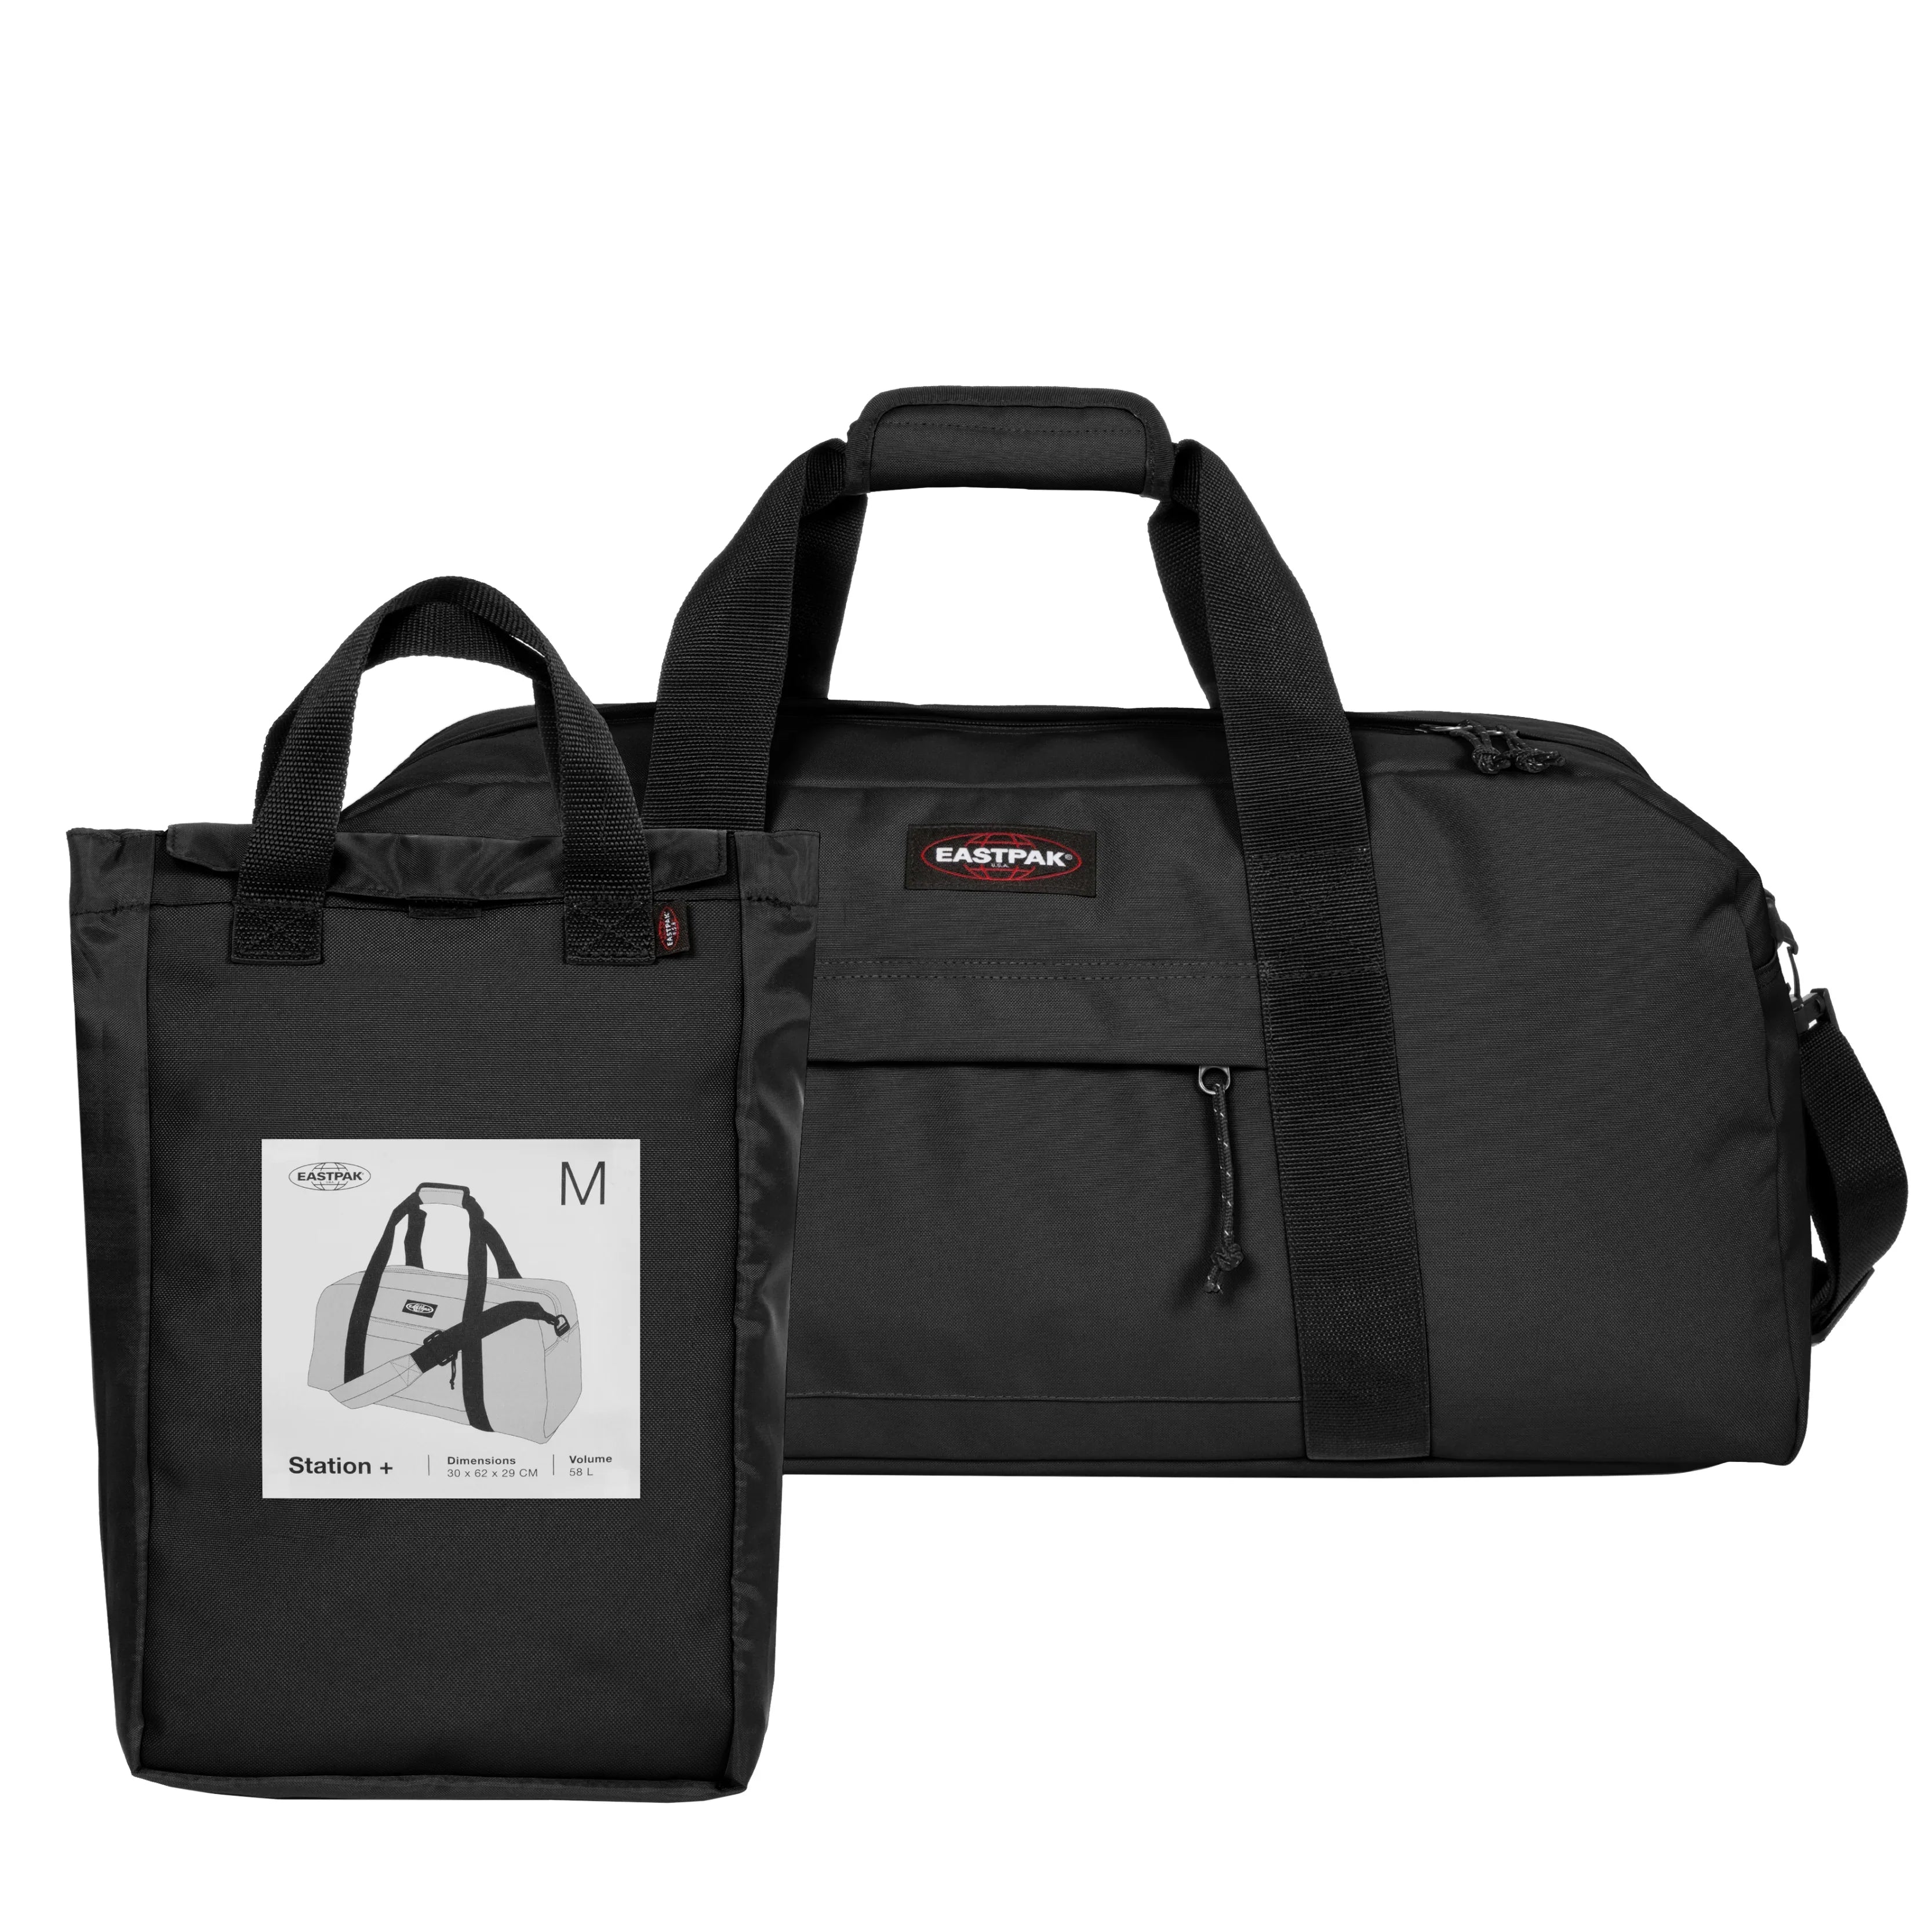 Eastpak Authentic Travel Station Plus Travel Bag 62 cm - black